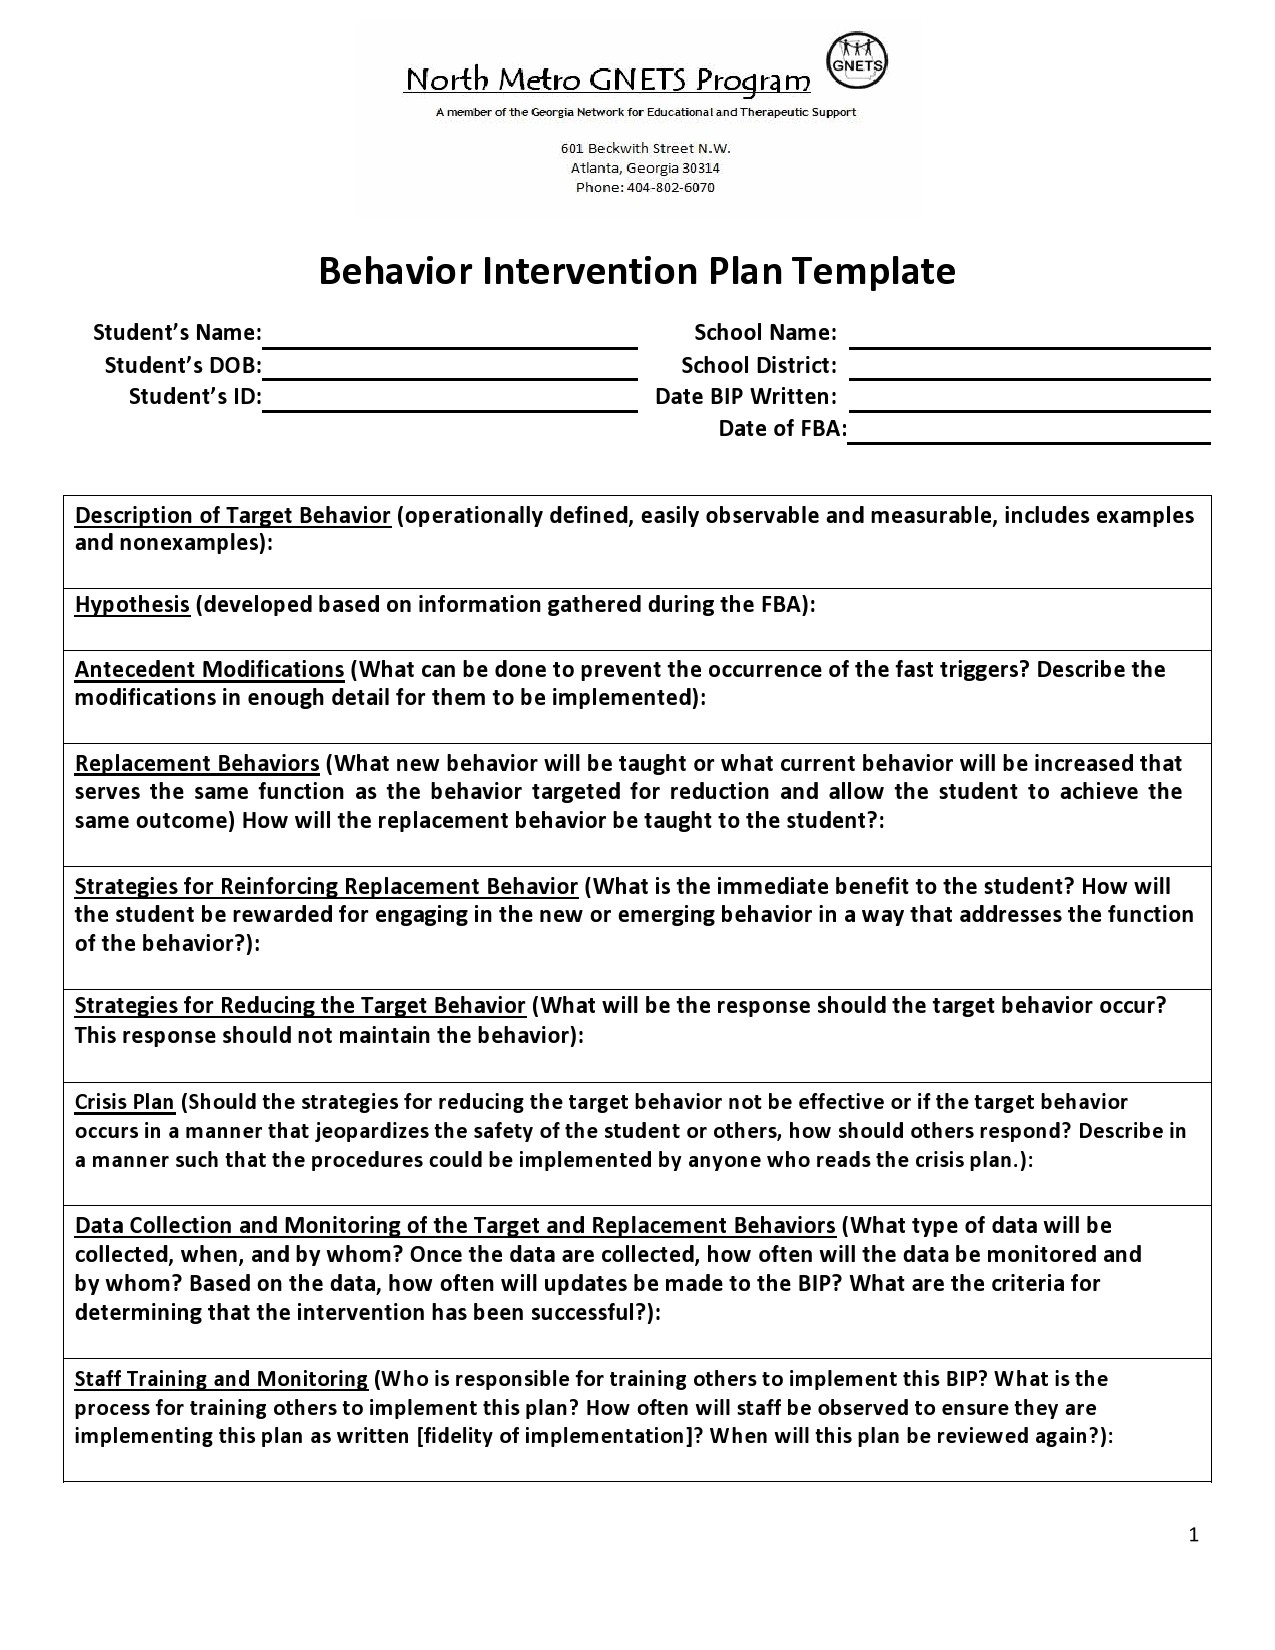 hypothesis statement for behavior intervention plan example